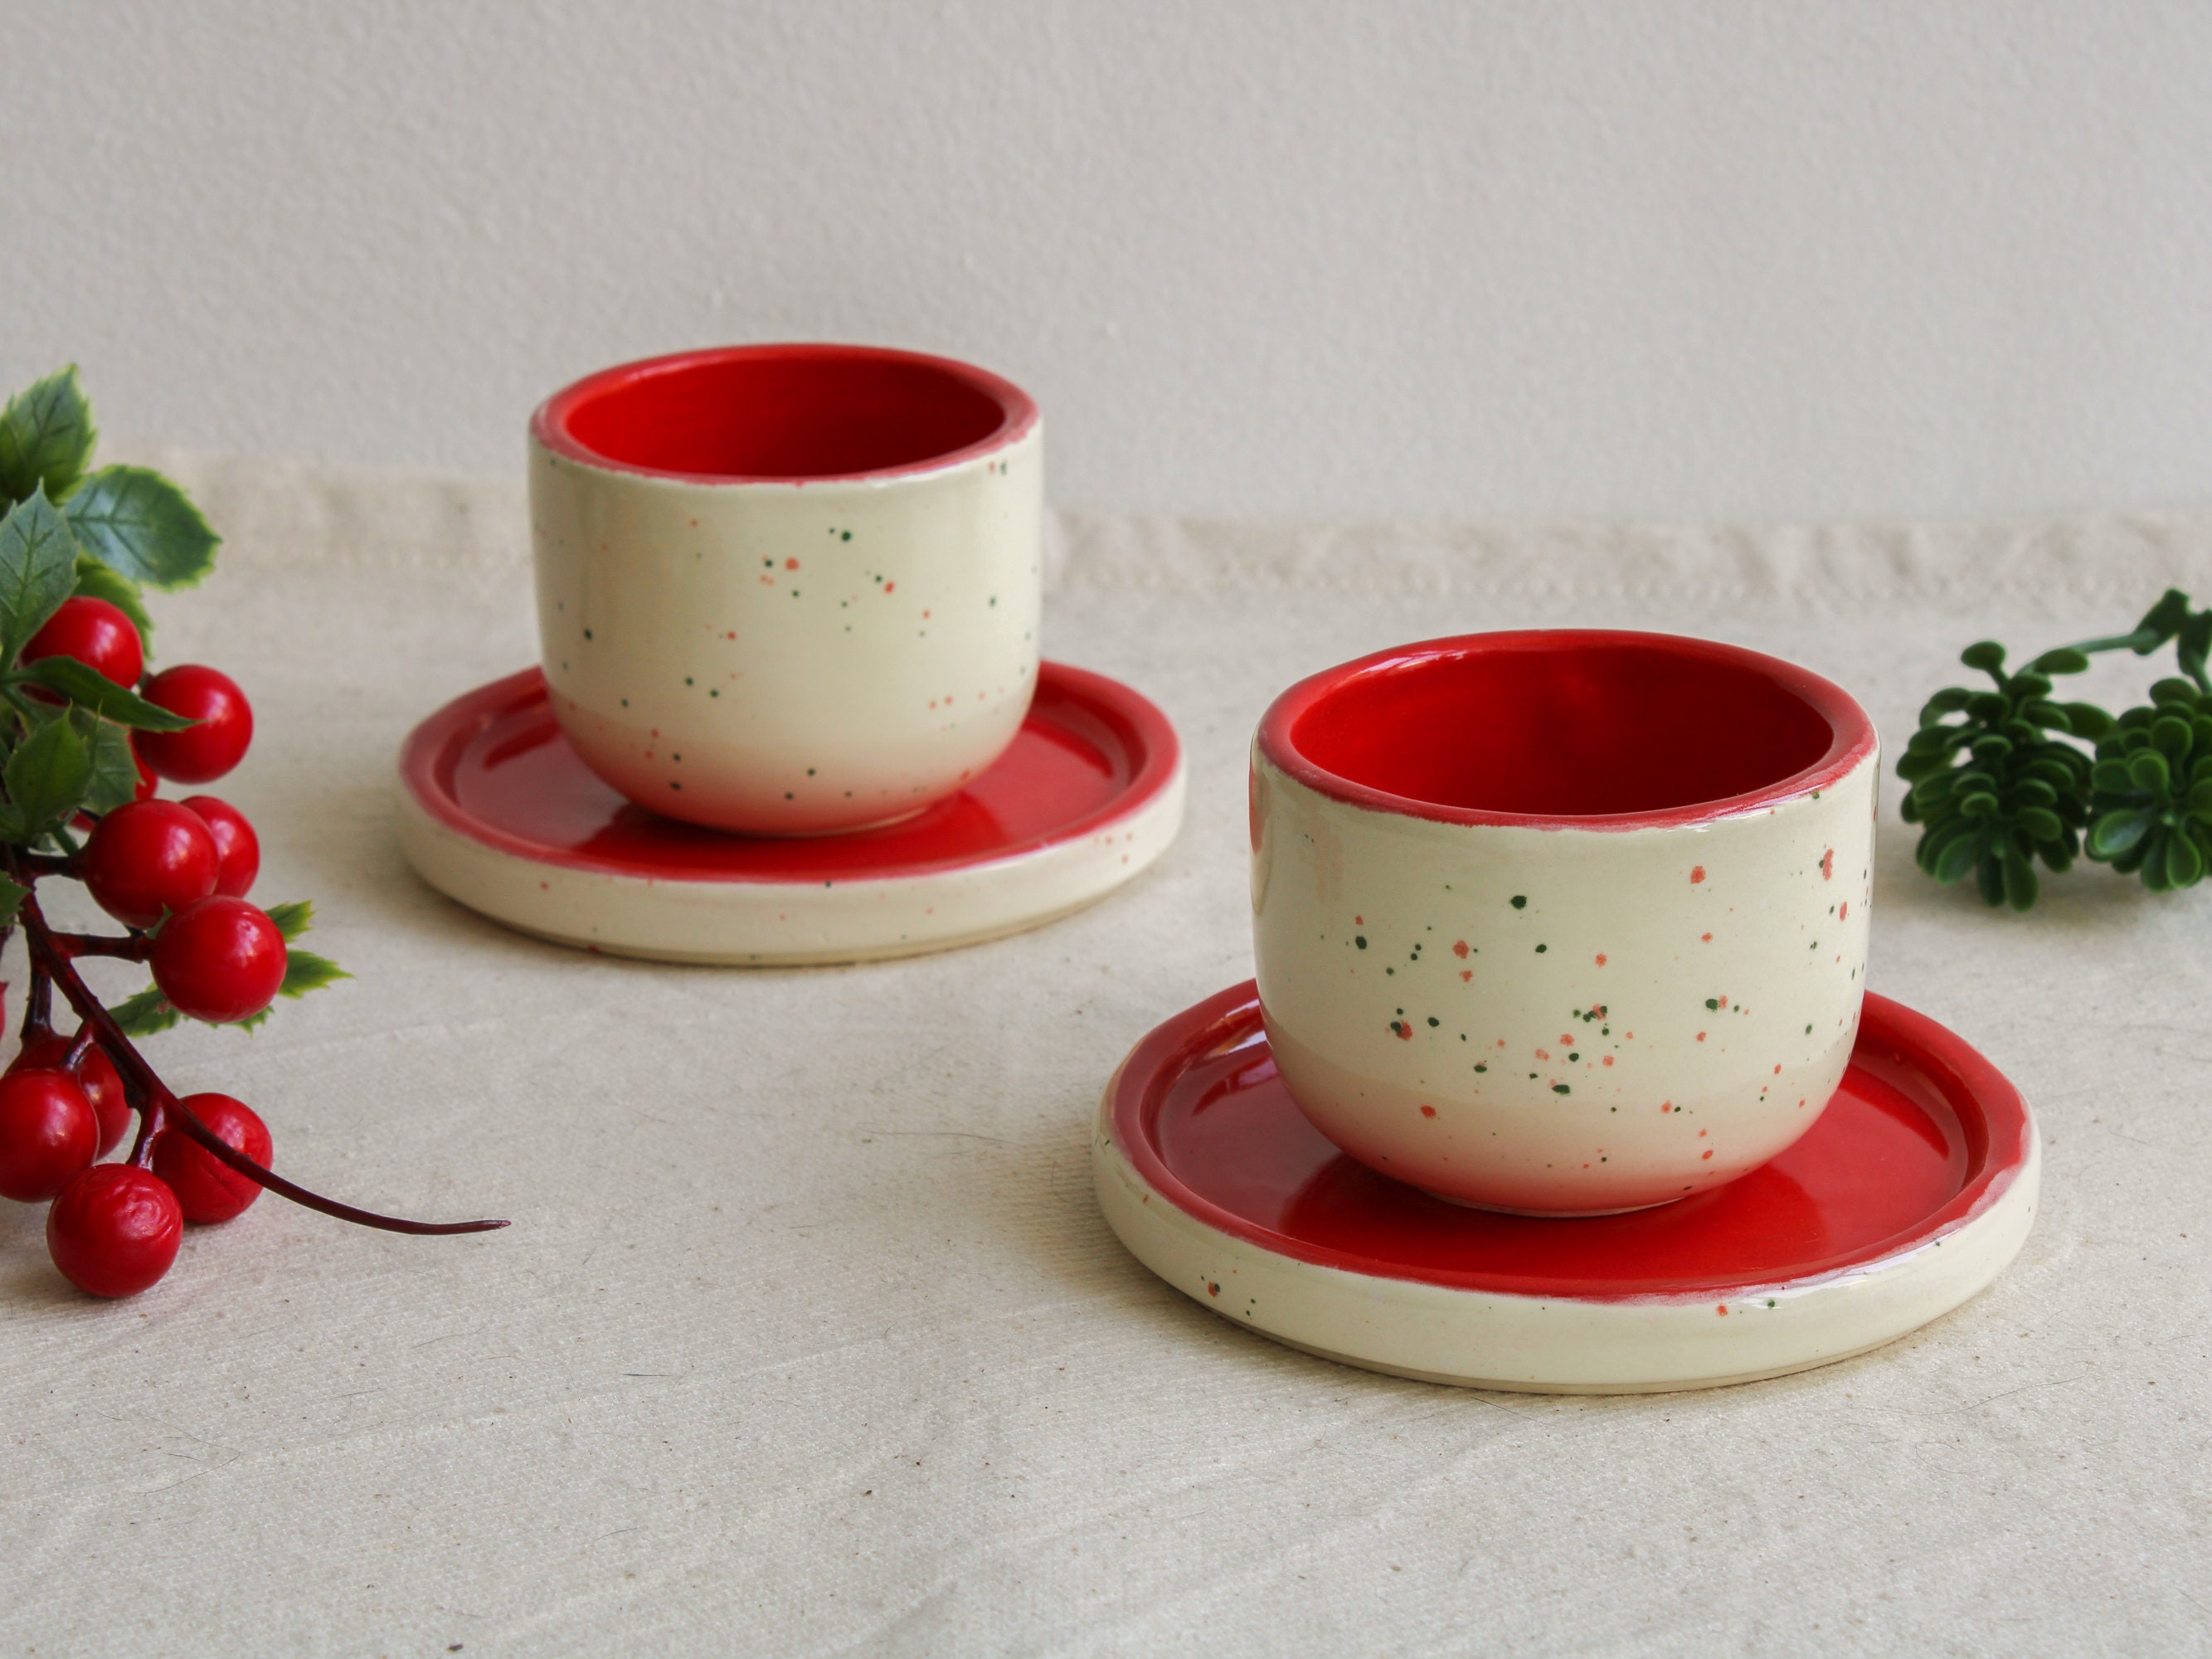 2 Oz. Espresso Cup, Handmade Ceramic Red and Speckled Espresso Cup With  Saucer, Ristretto Cup, Macchiato Cup 